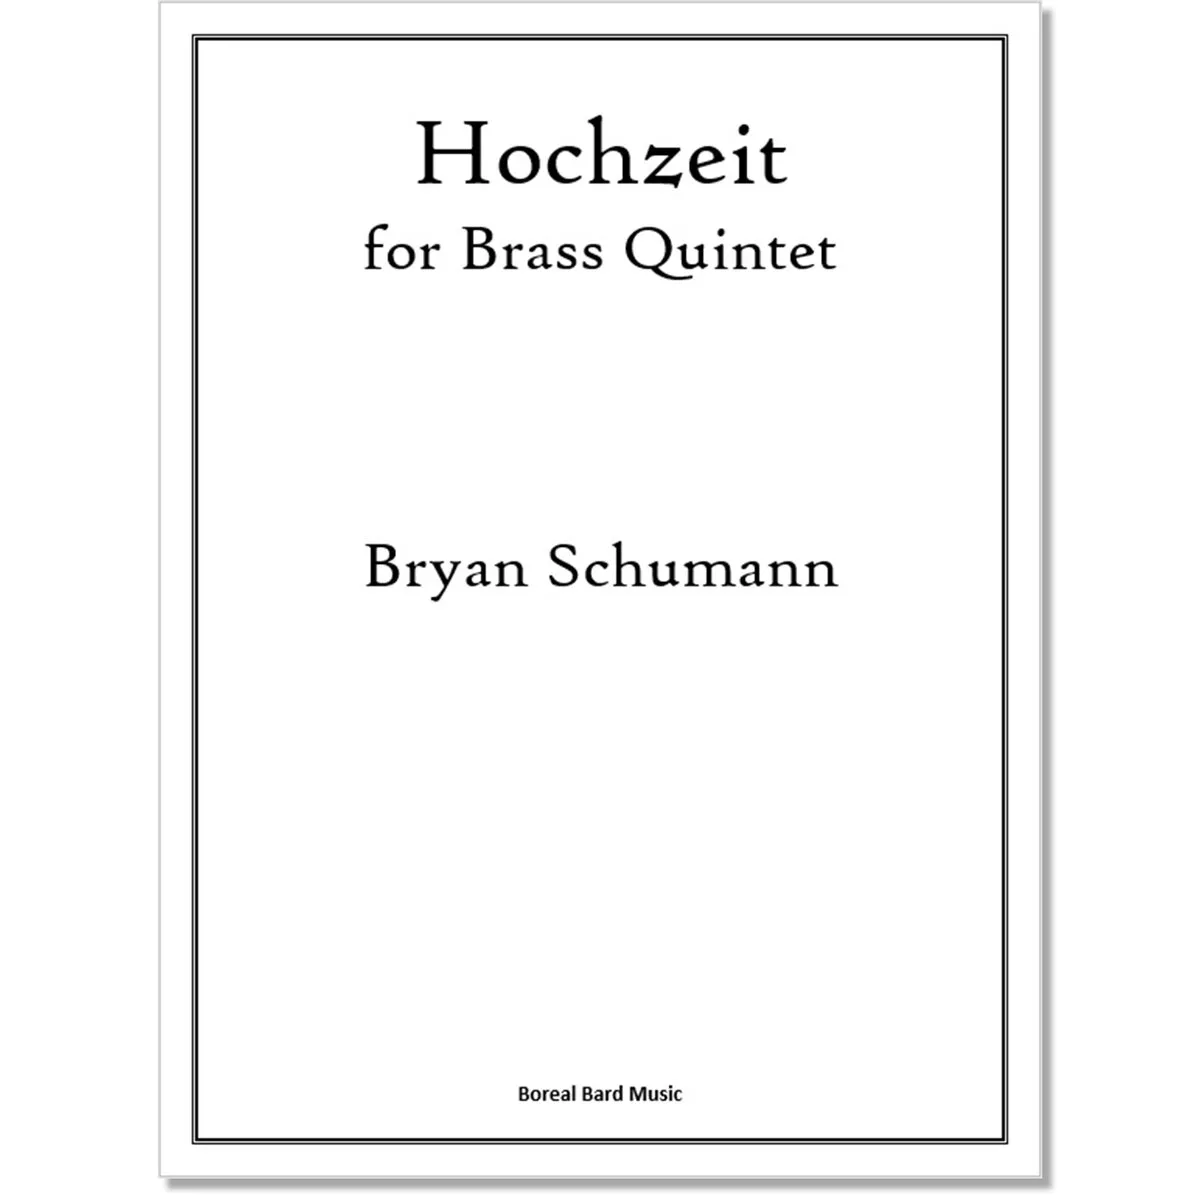 Hochzeit for Brass Quintet (sheet music)